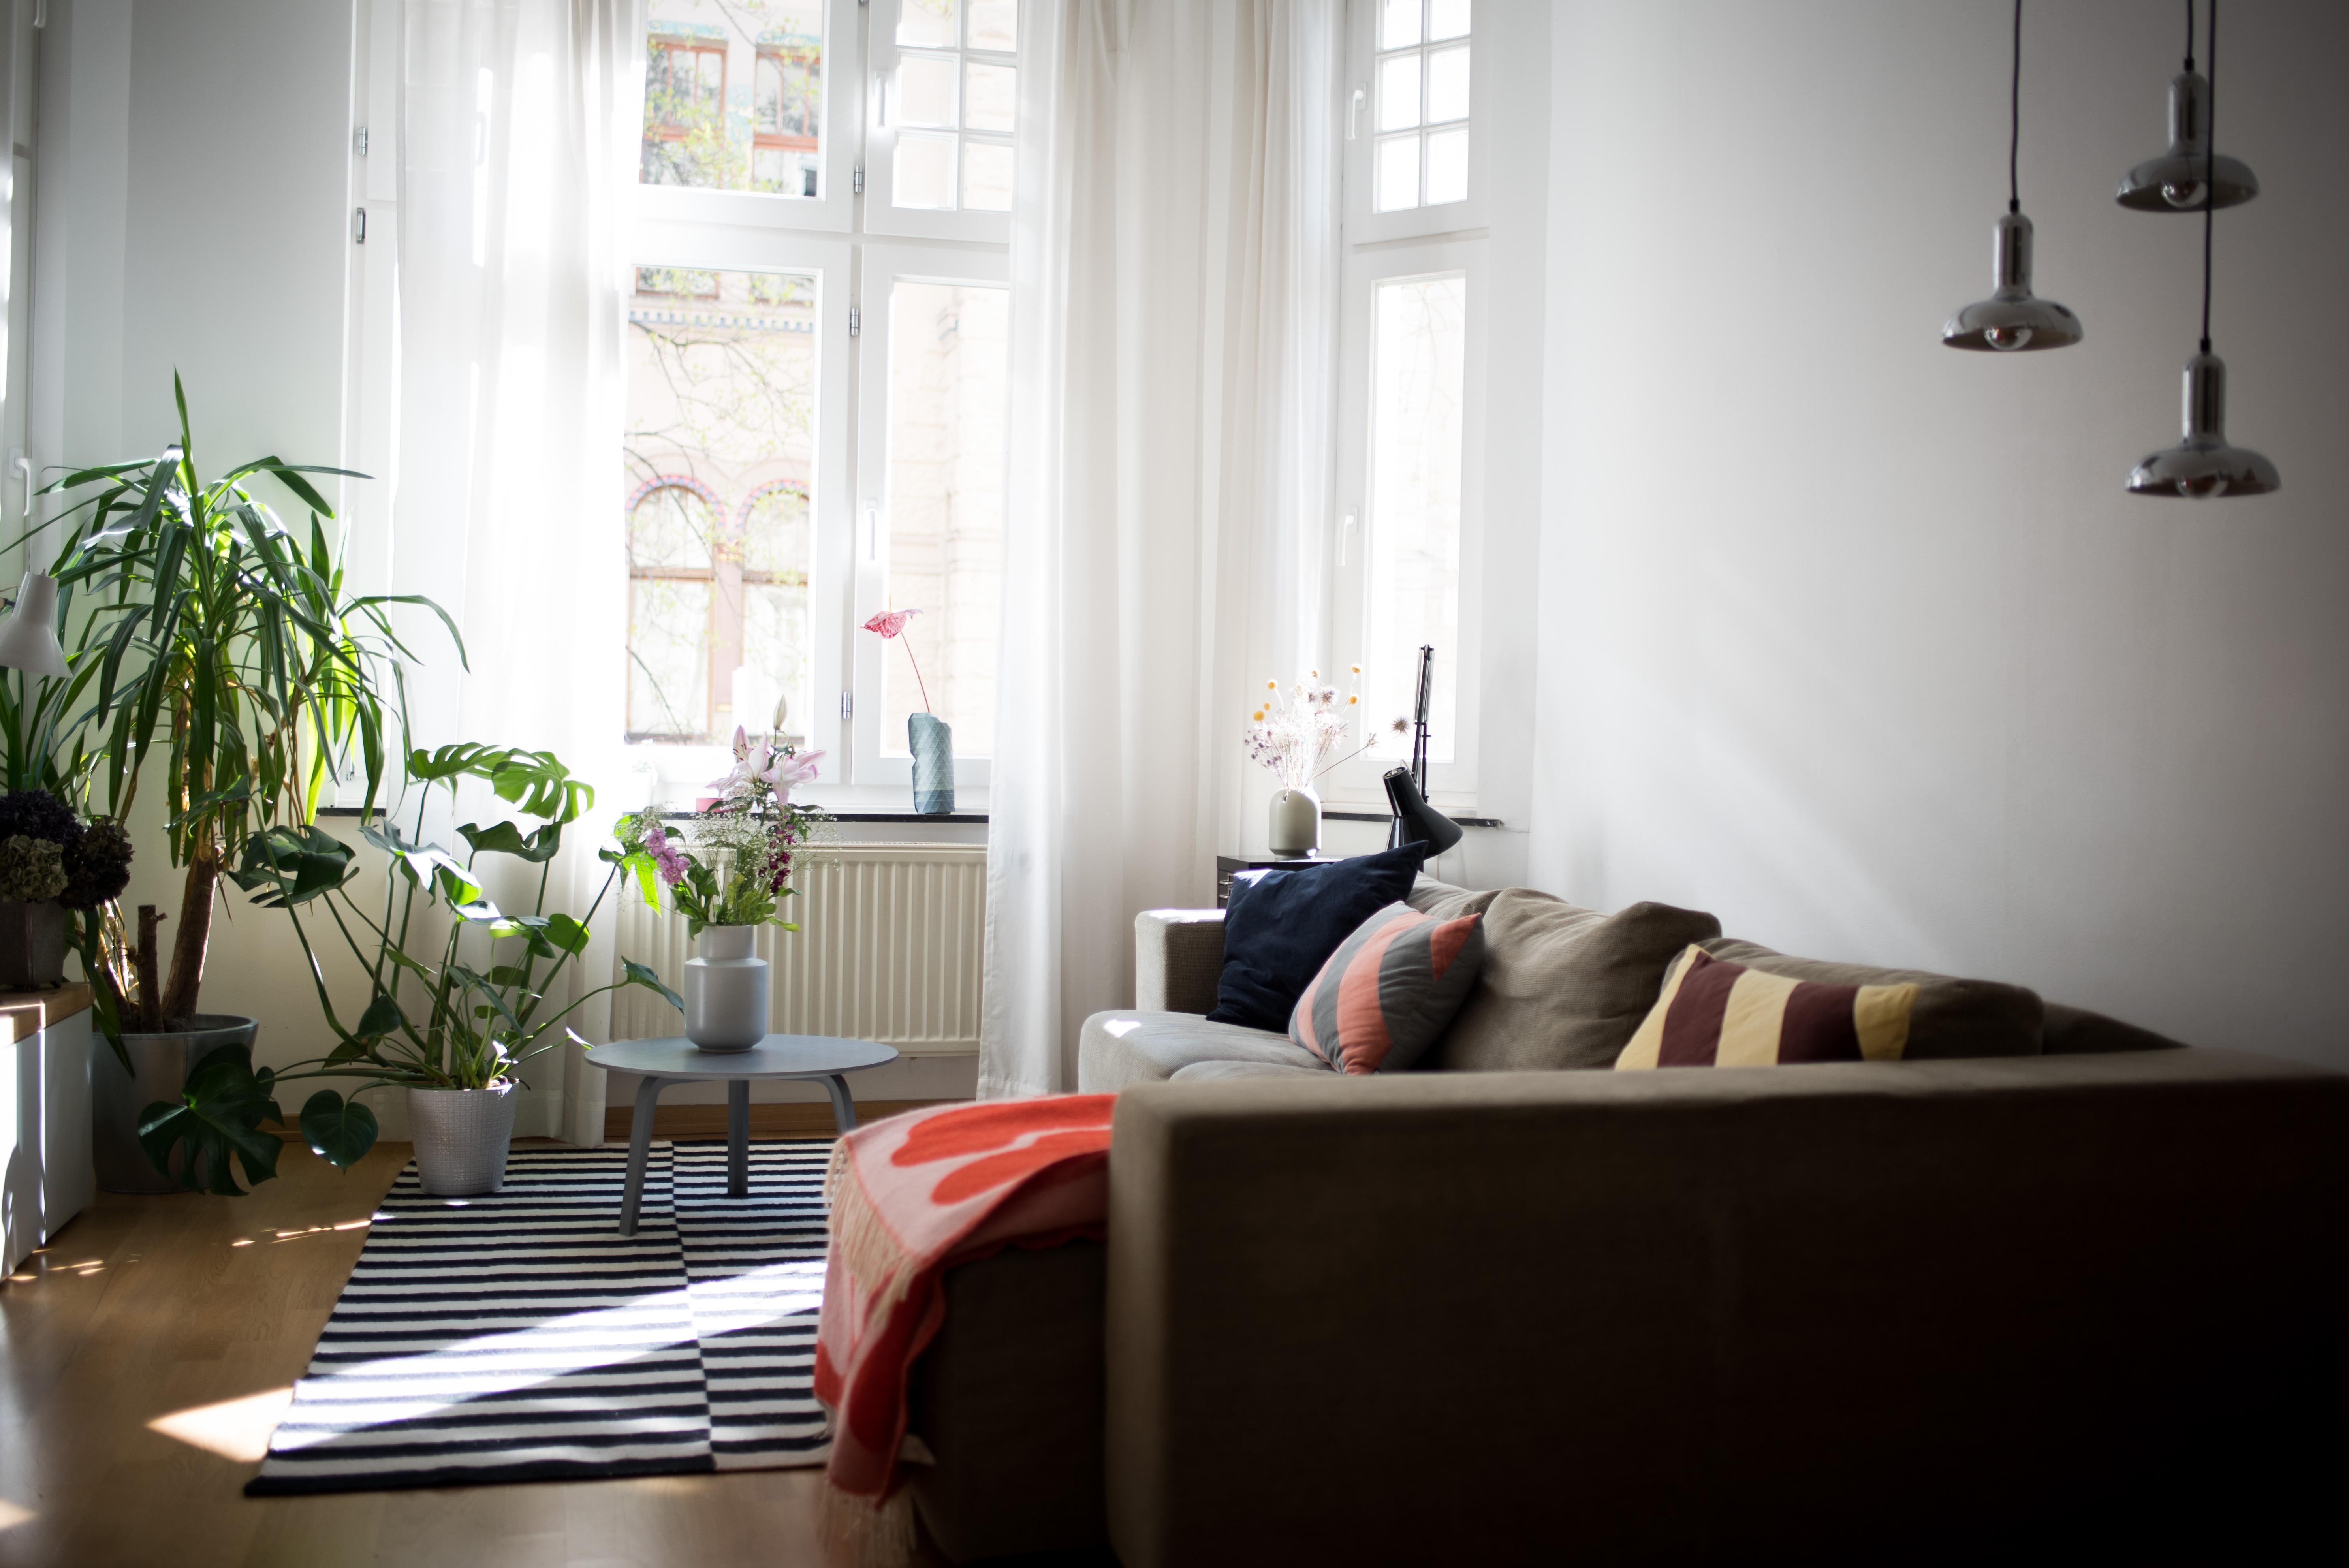 Sonniger Morgen! #wohnzimmer #interiorinspo #cozyplace #sofa #Altbau